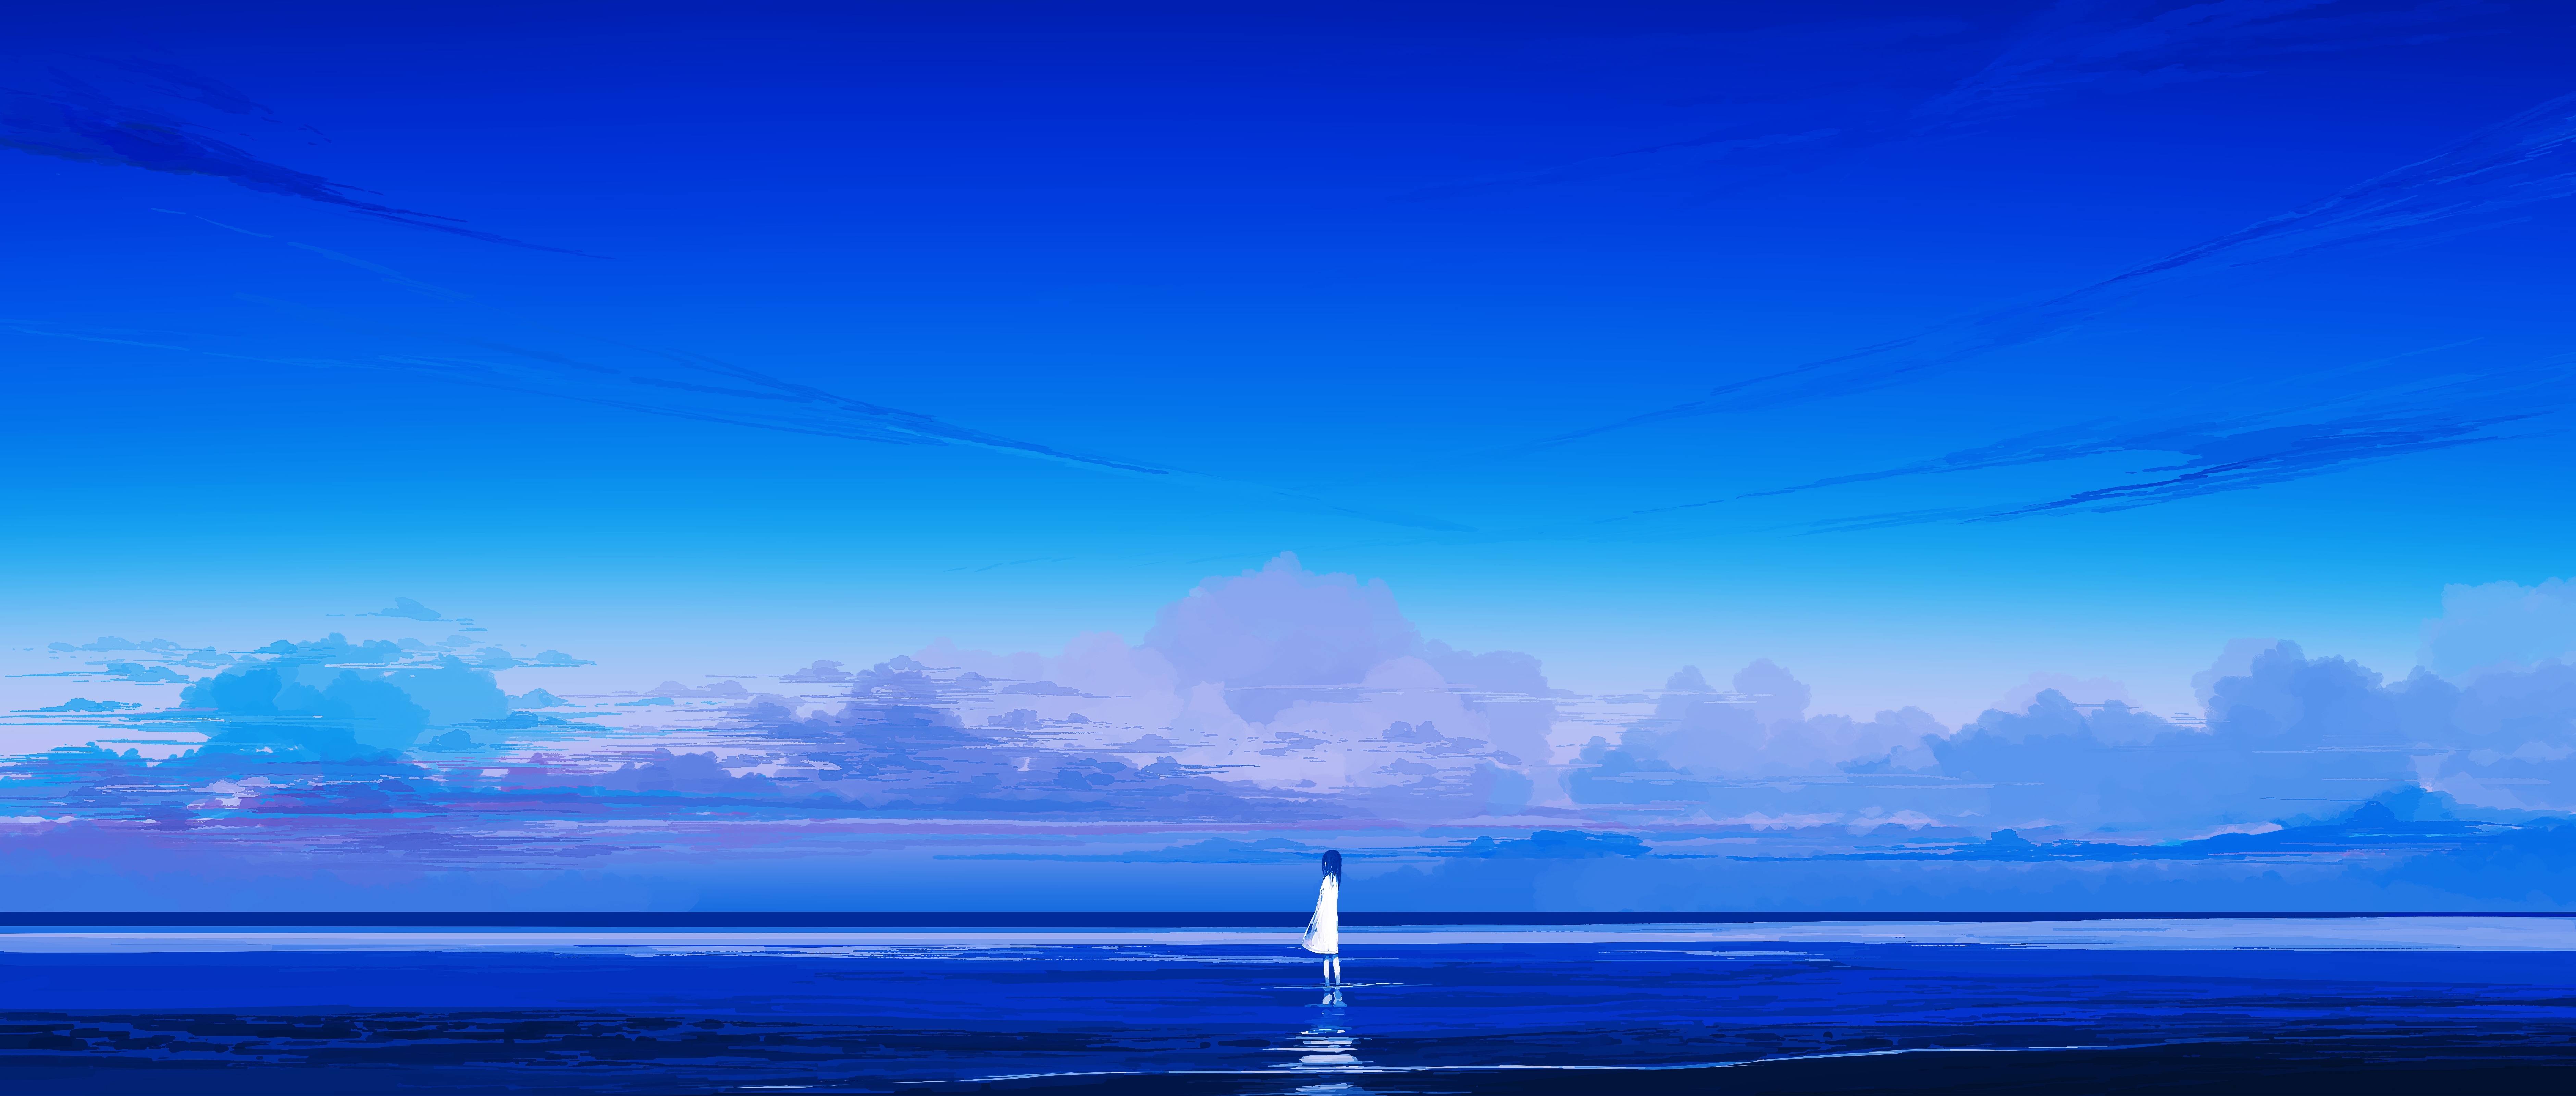 HD wallpaper, Panoramic, 5K, Alone, Horizon, Lonely, Mood, Blue Sky, Beach